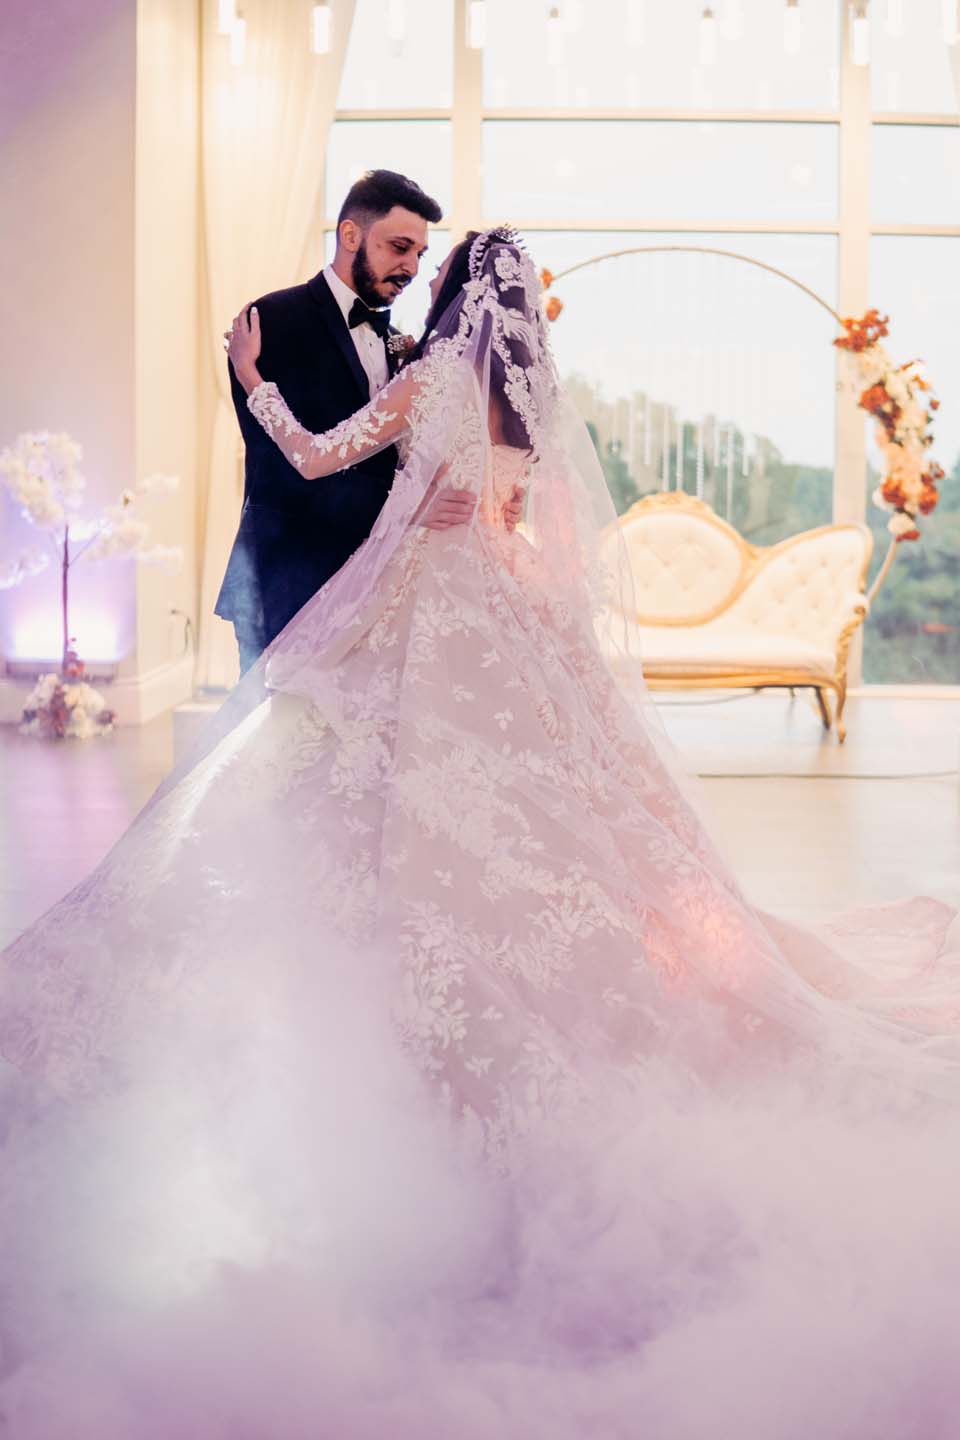 wedding dance floor fog machine